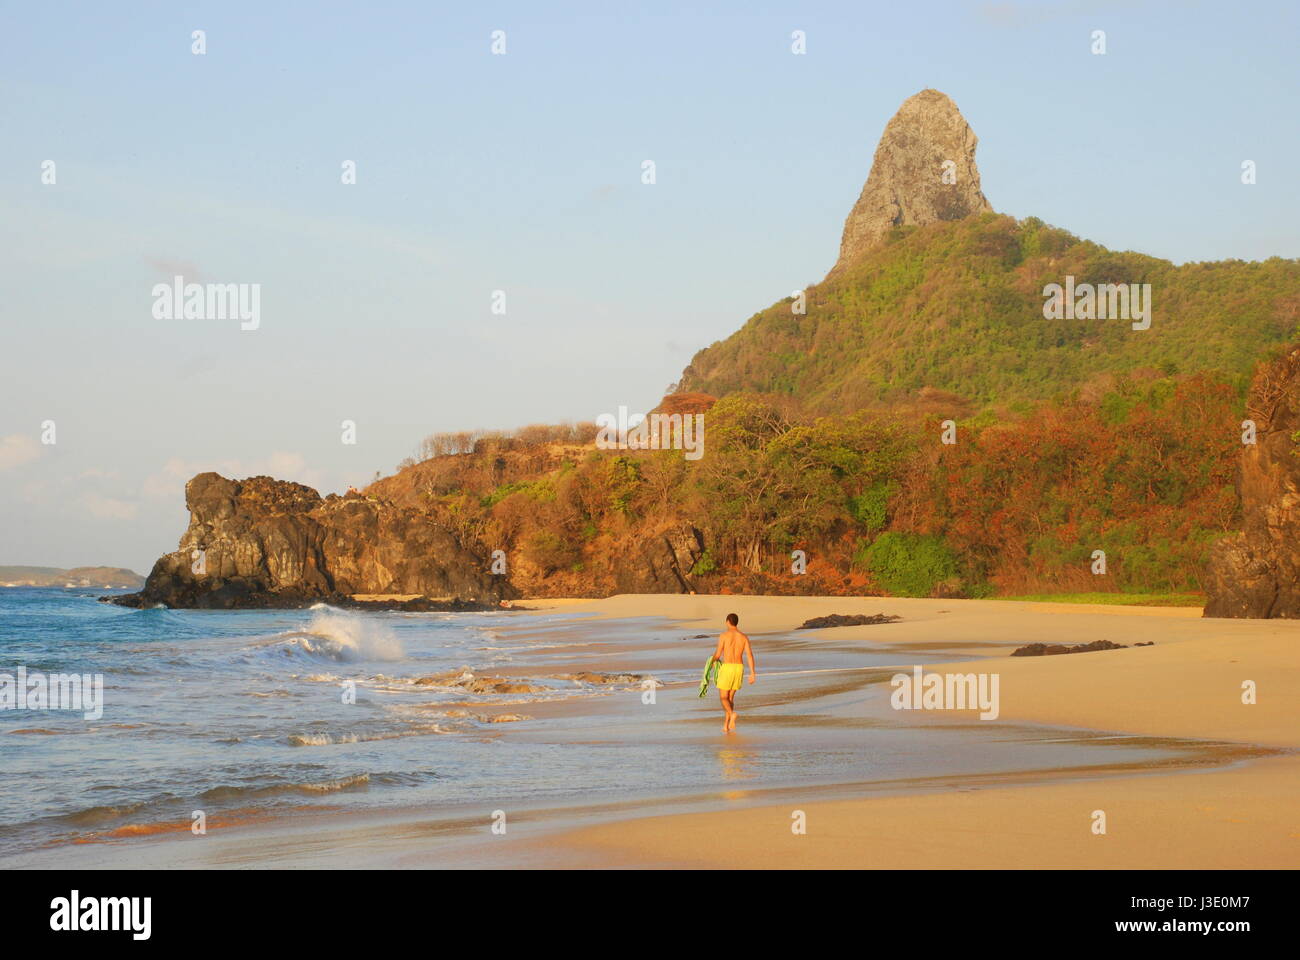 Praia Boldro Strand, Fernando De Noronha, Pernambuco, Brasilien. Typische Strand und Tocky Außenposten. Stockfoto